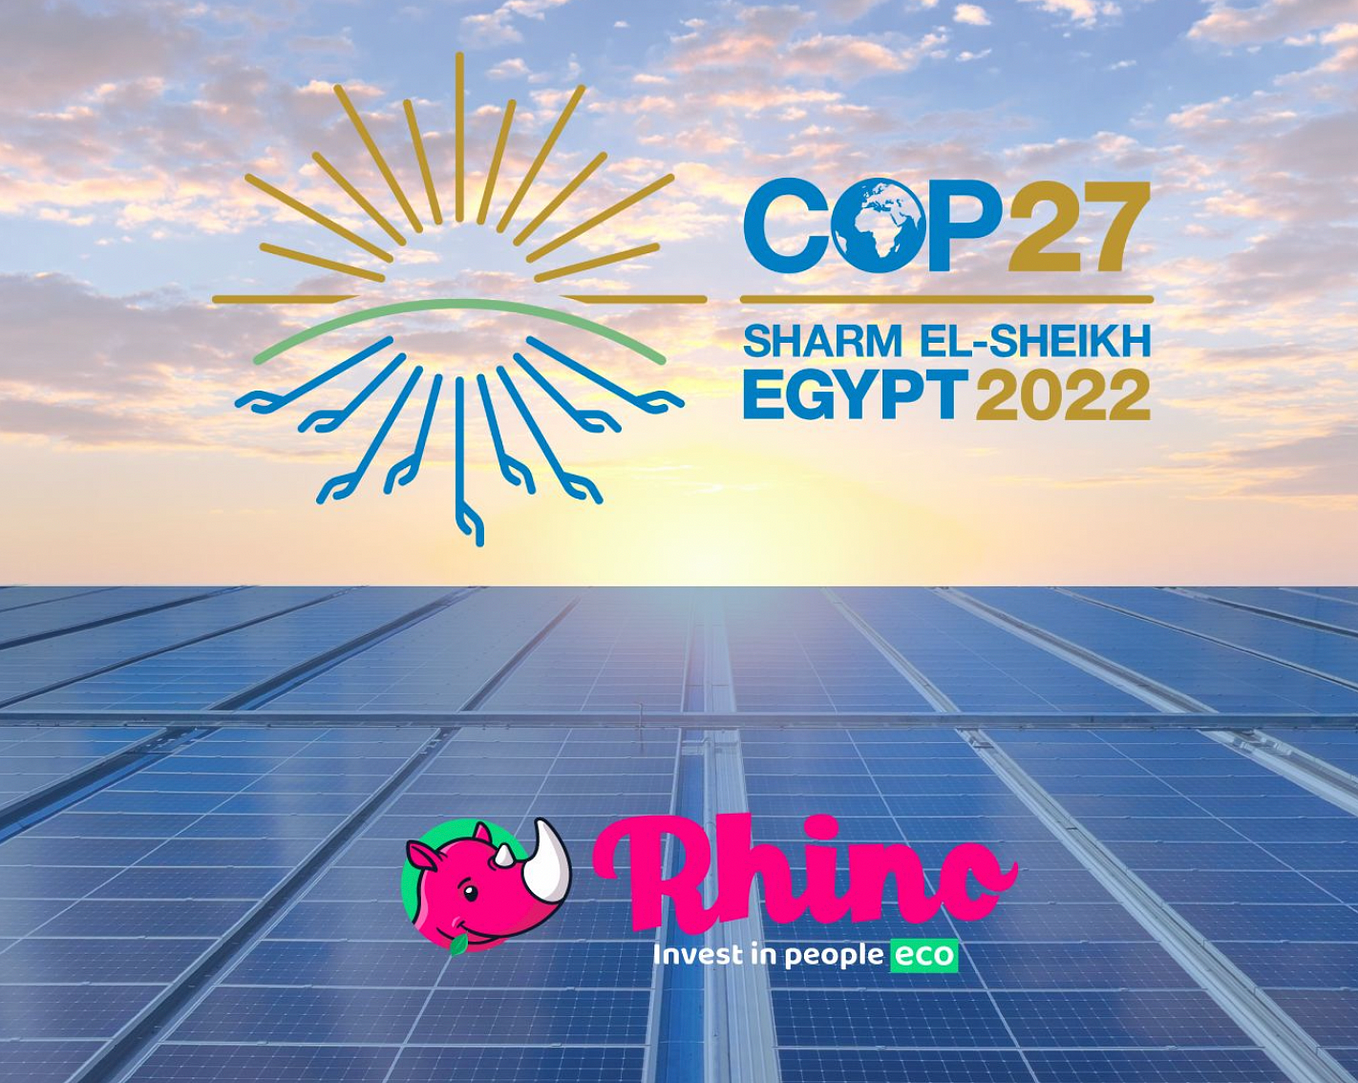 Rhino Eco - Solar Financing Made Easy